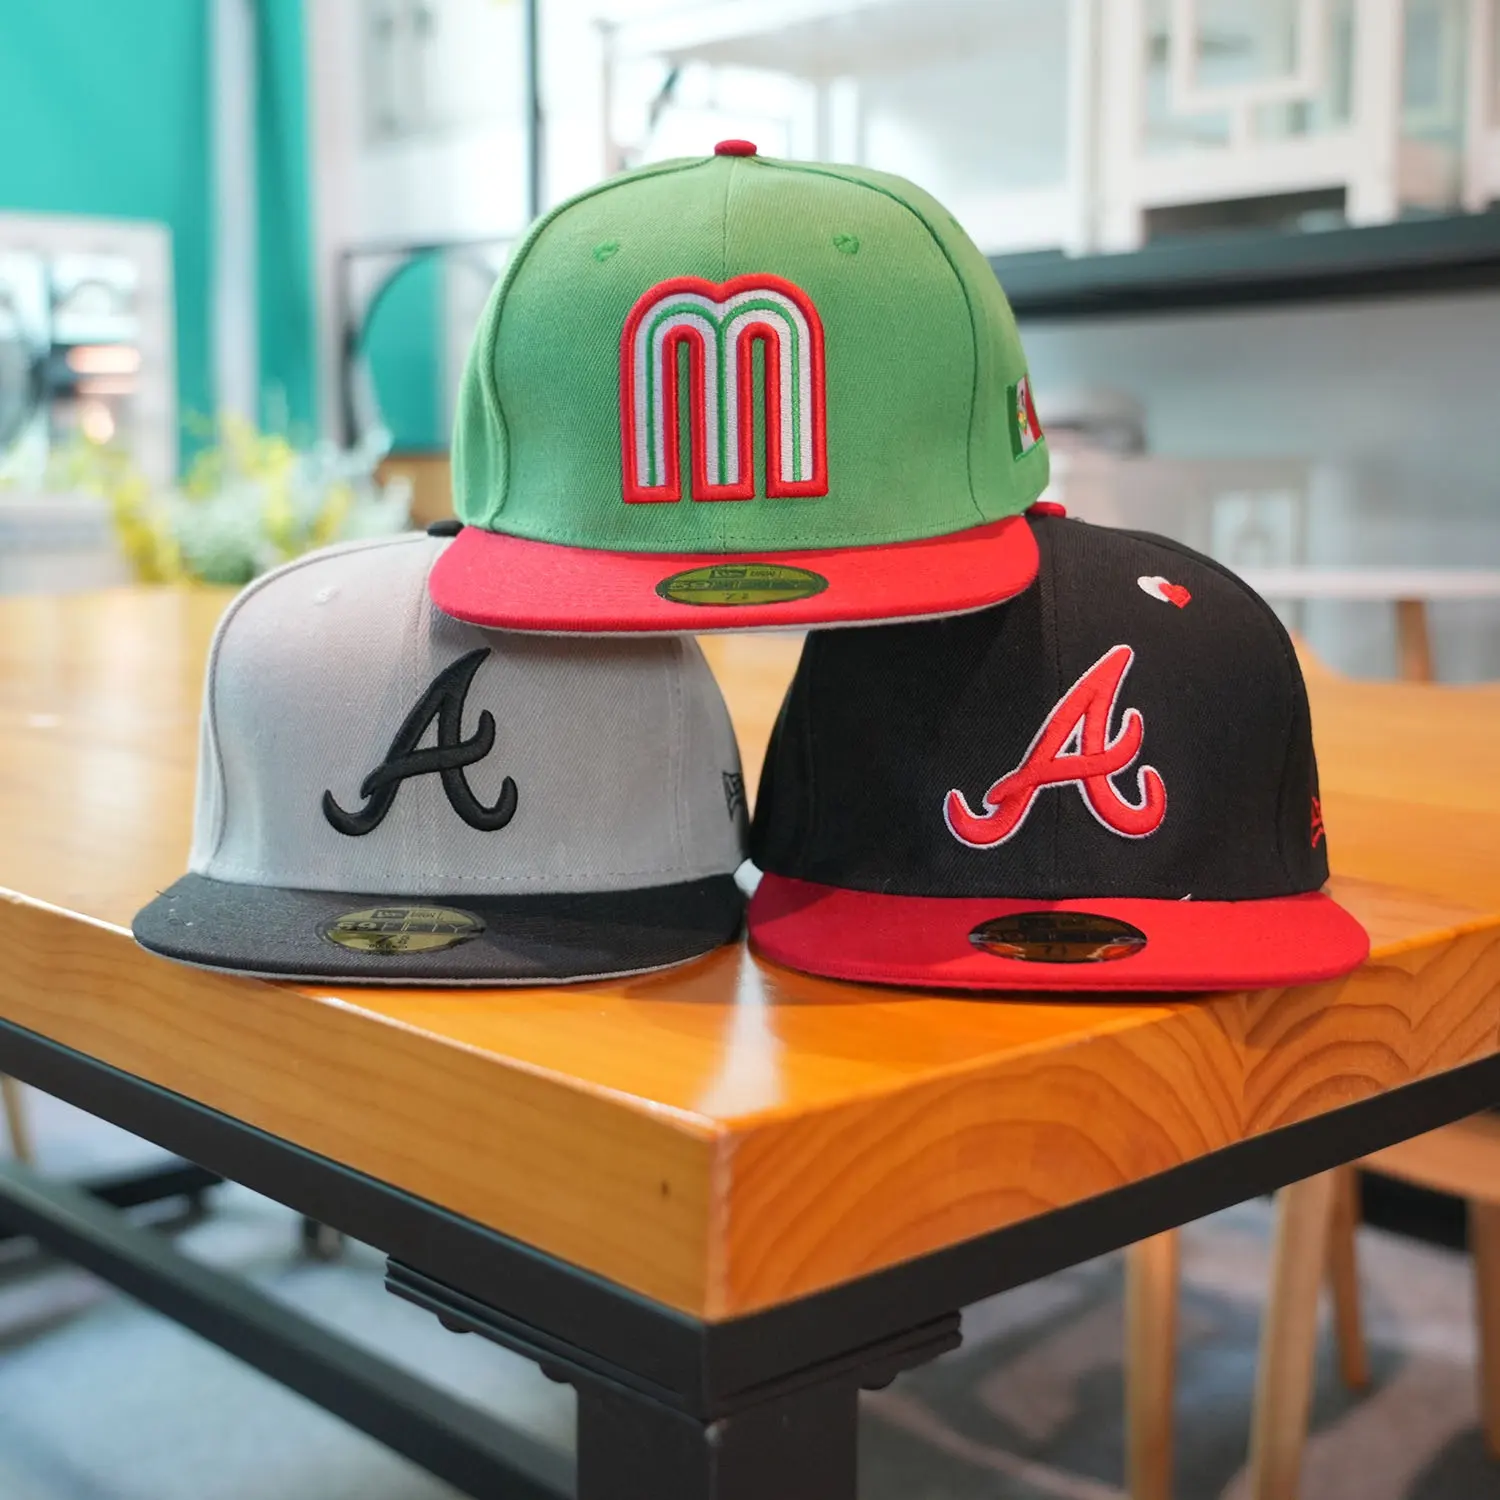 Gorras หมวกแก็ป6แผงแบบดั้งเดิมพร้อมโลโก้ปักลายหมวกเบสบอลทรงปีกแบน